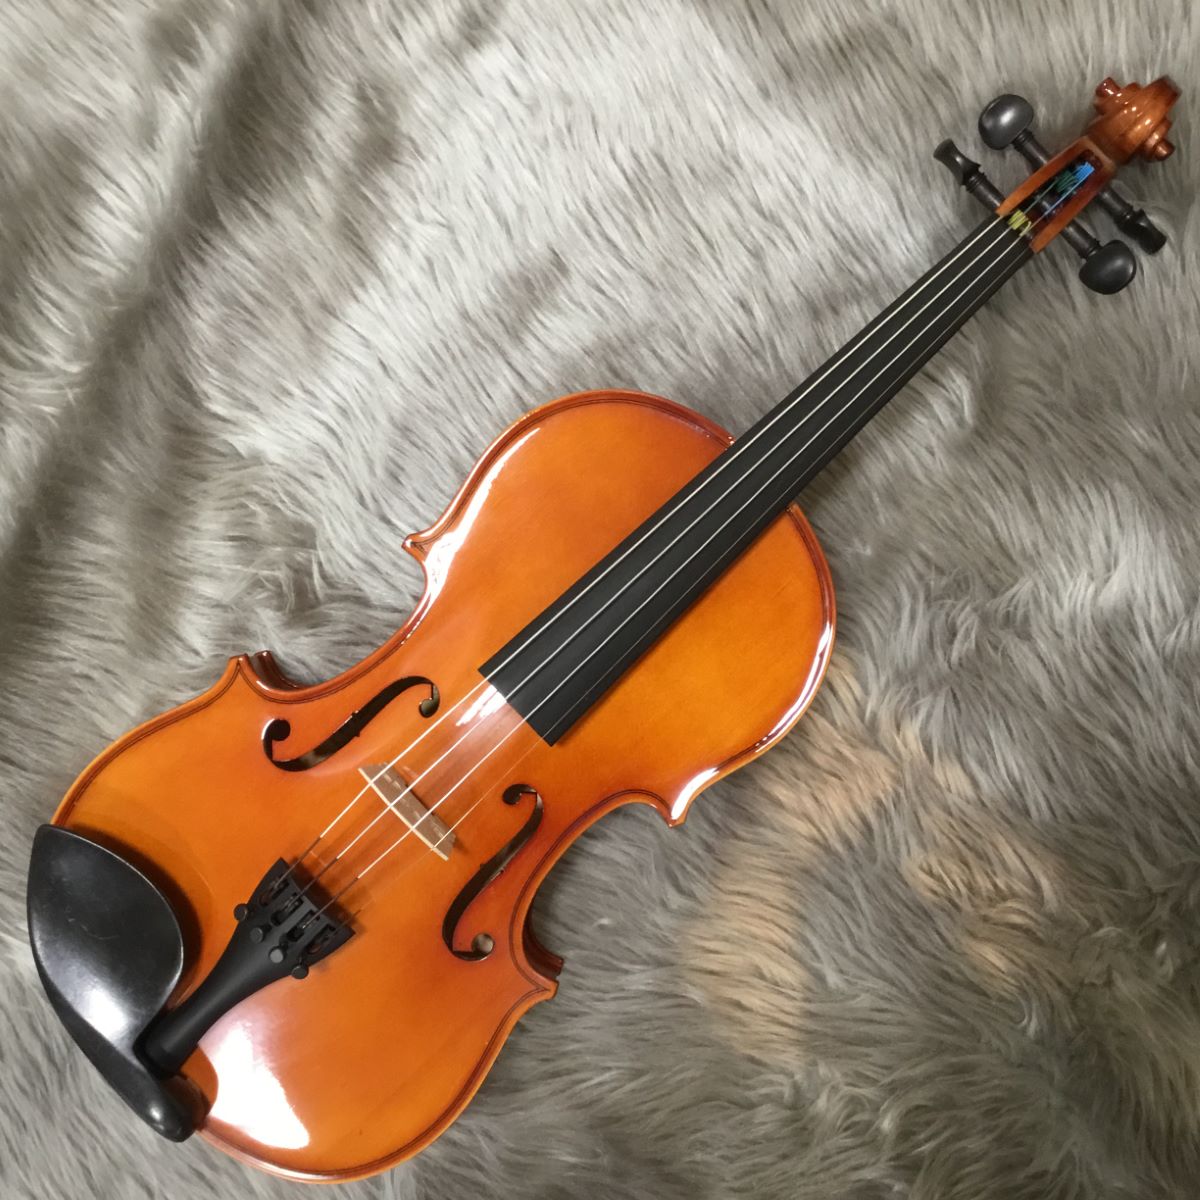 Carlo giordano バイオリン VS-1 1/4サイズ 2011年 ホビー・楽器 